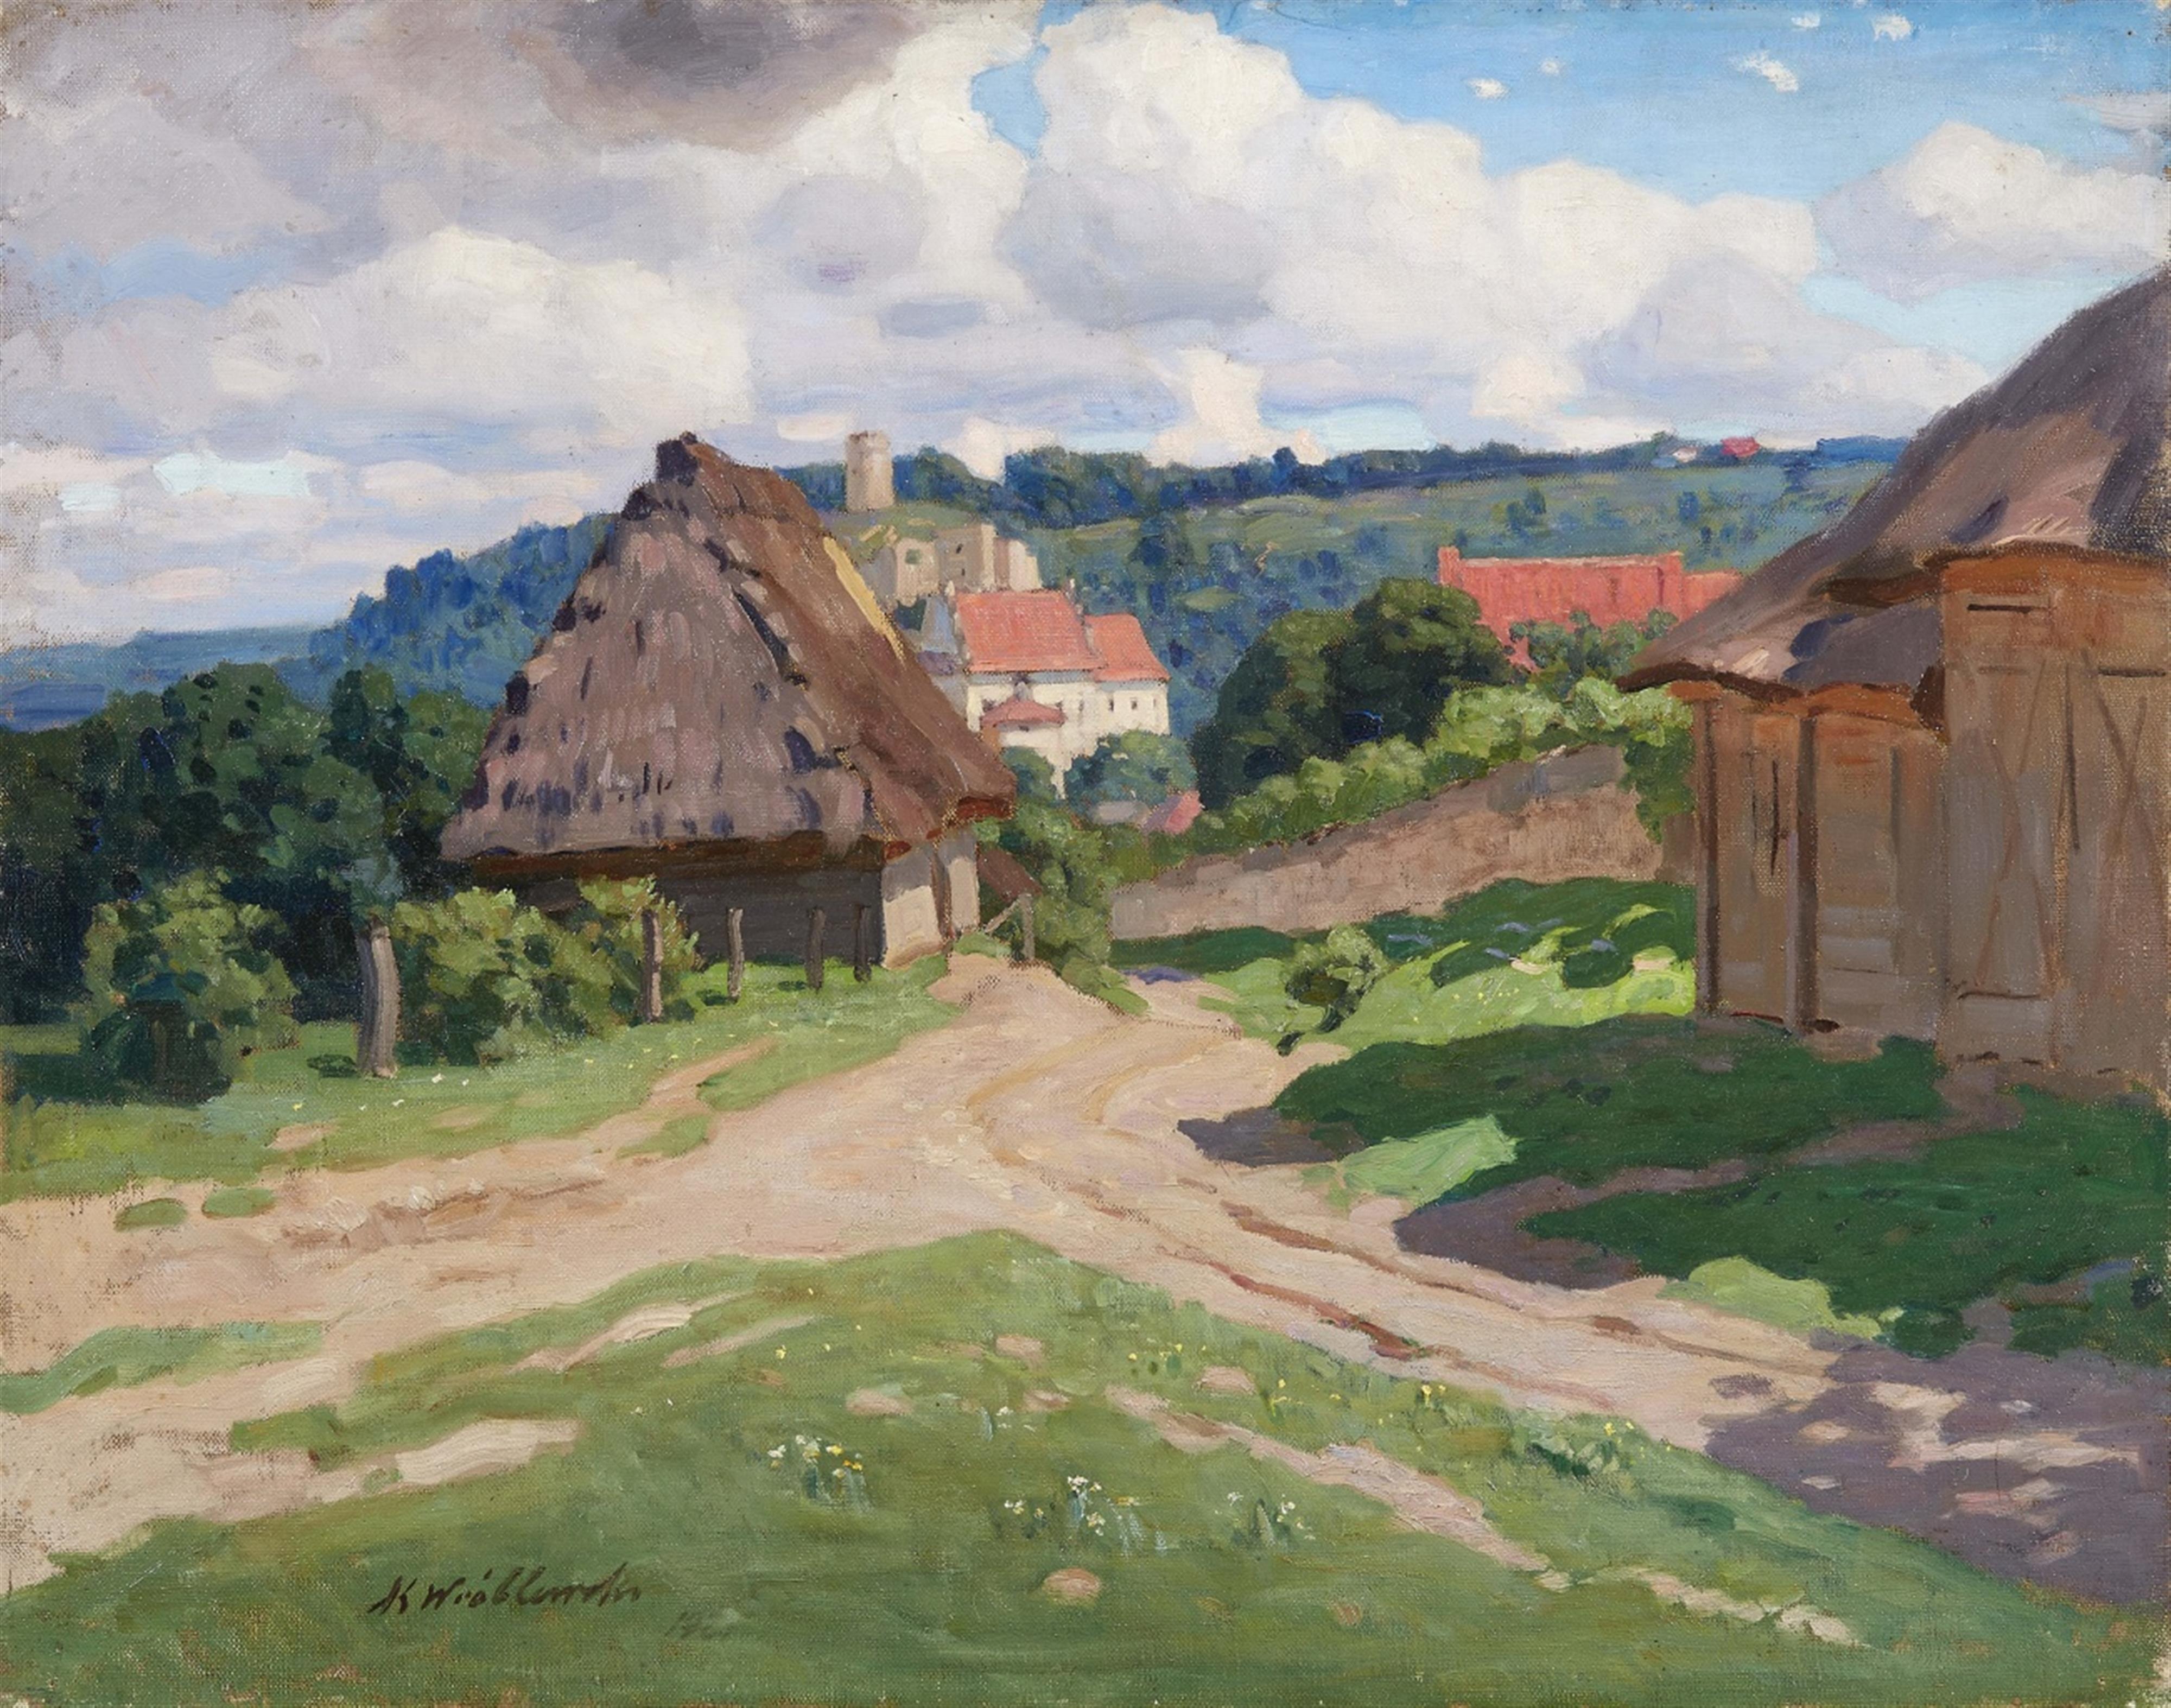 Konstantin Haritonov Wroblewsky - Mountain Landscape with a Village and Castle